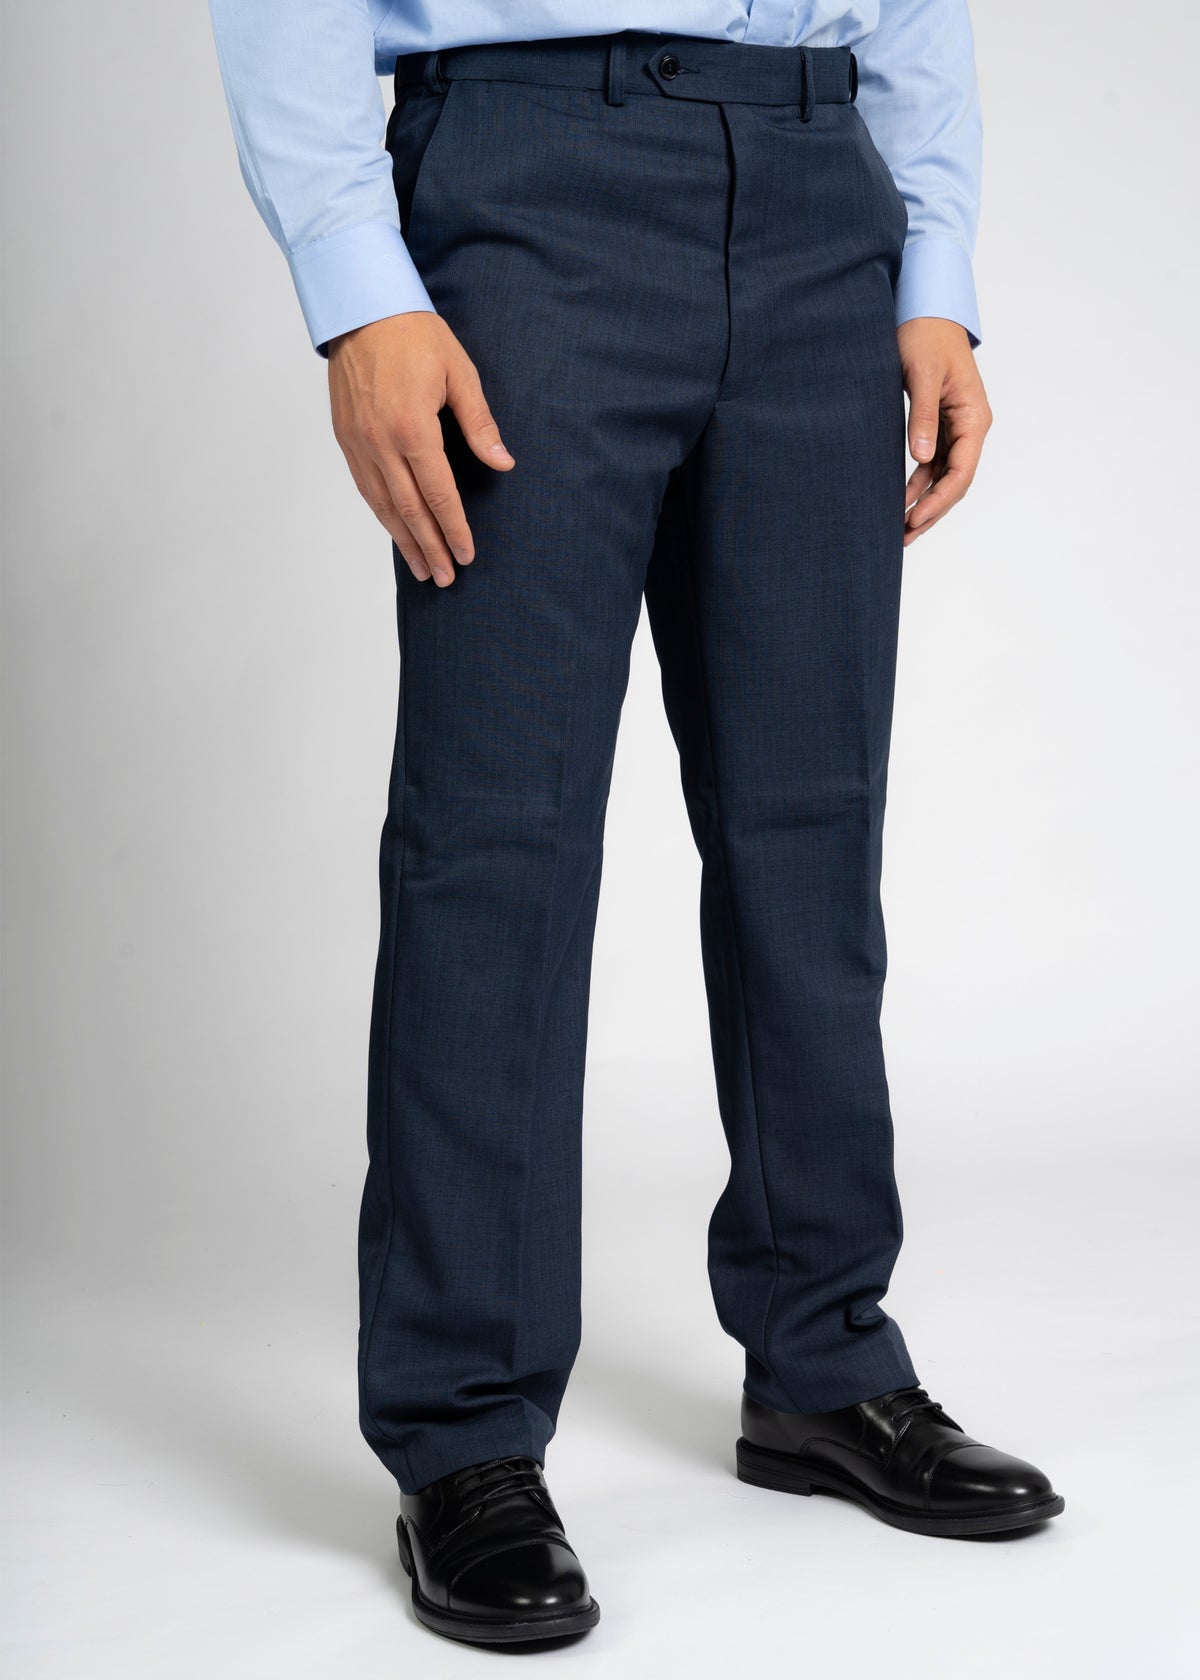 Looking Smart Navy Blue Pants